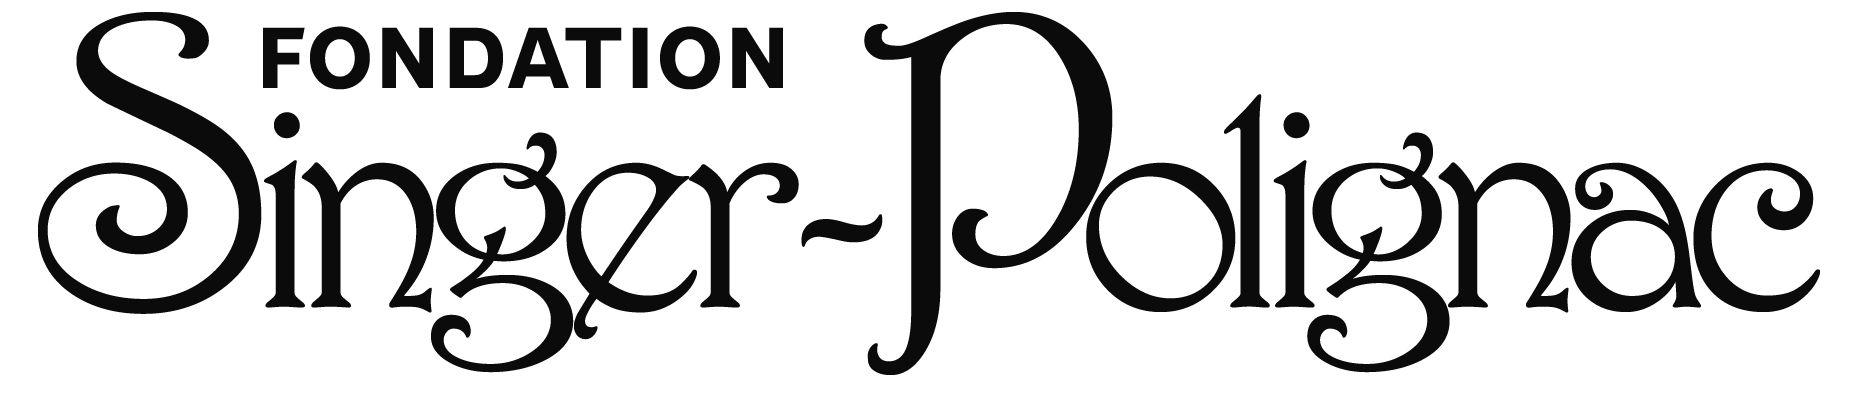 Logo Fondation Singer-Polignac - Bandeau